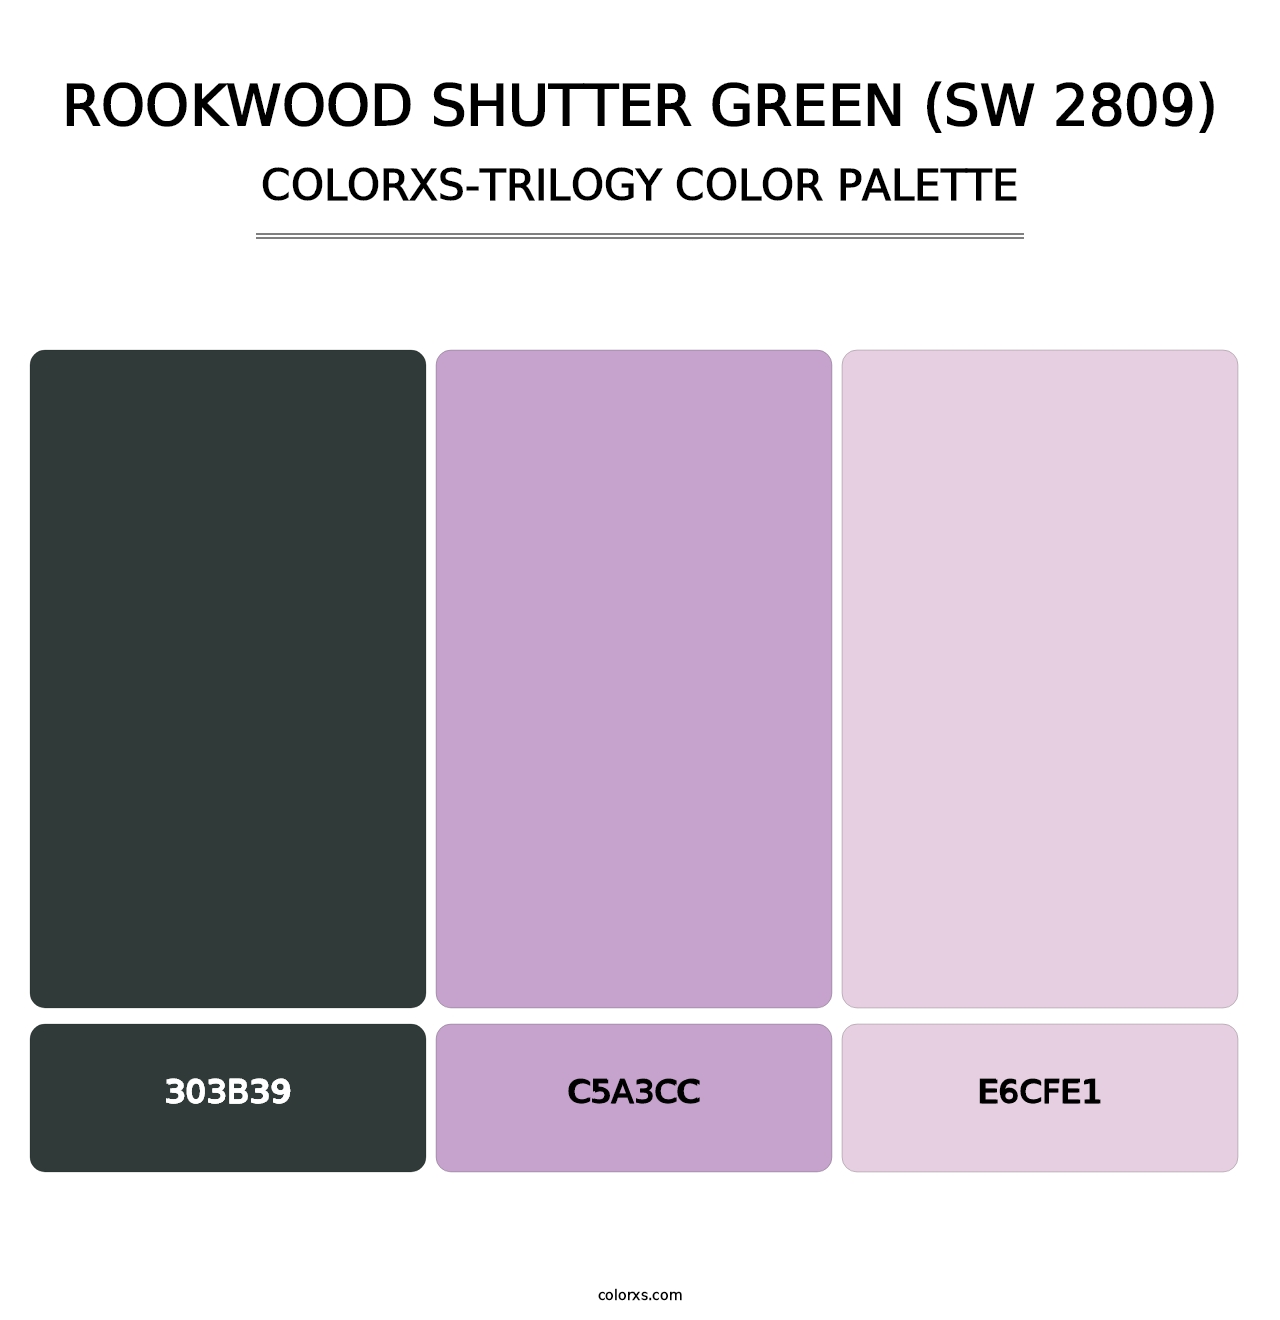 Rookwood Shutter Green (SW 2809) - Colorxs Trilogy Palette